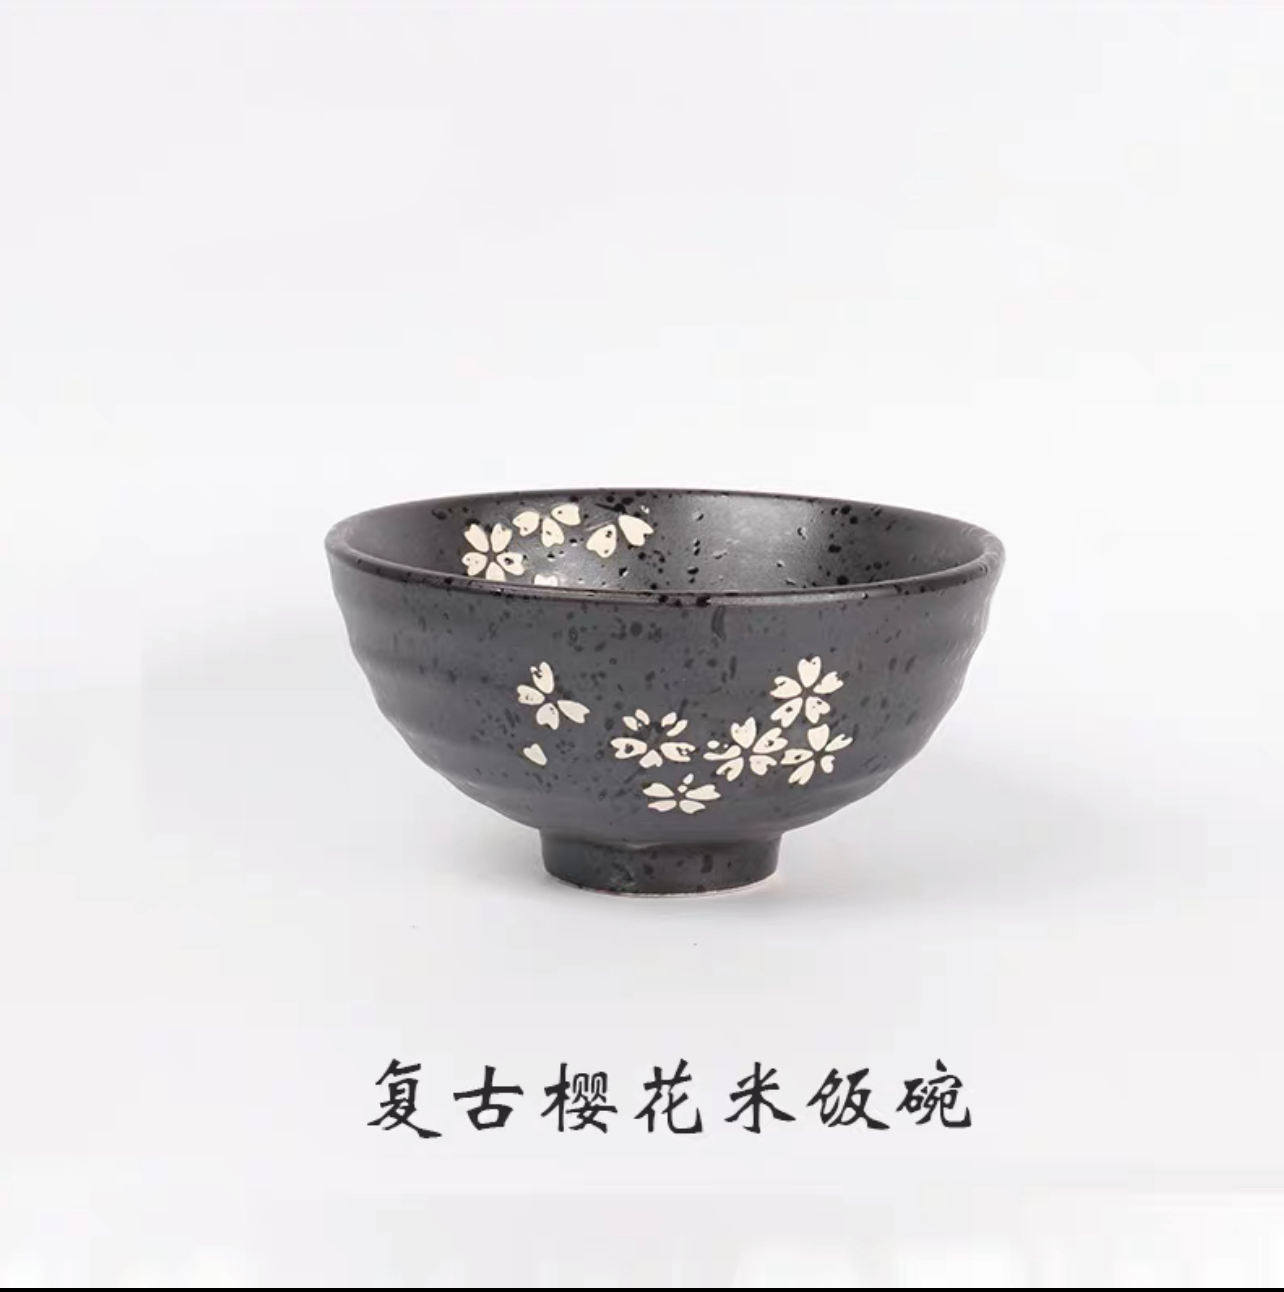 Japanese Style Cherry blossom Bowl
日本饭碗